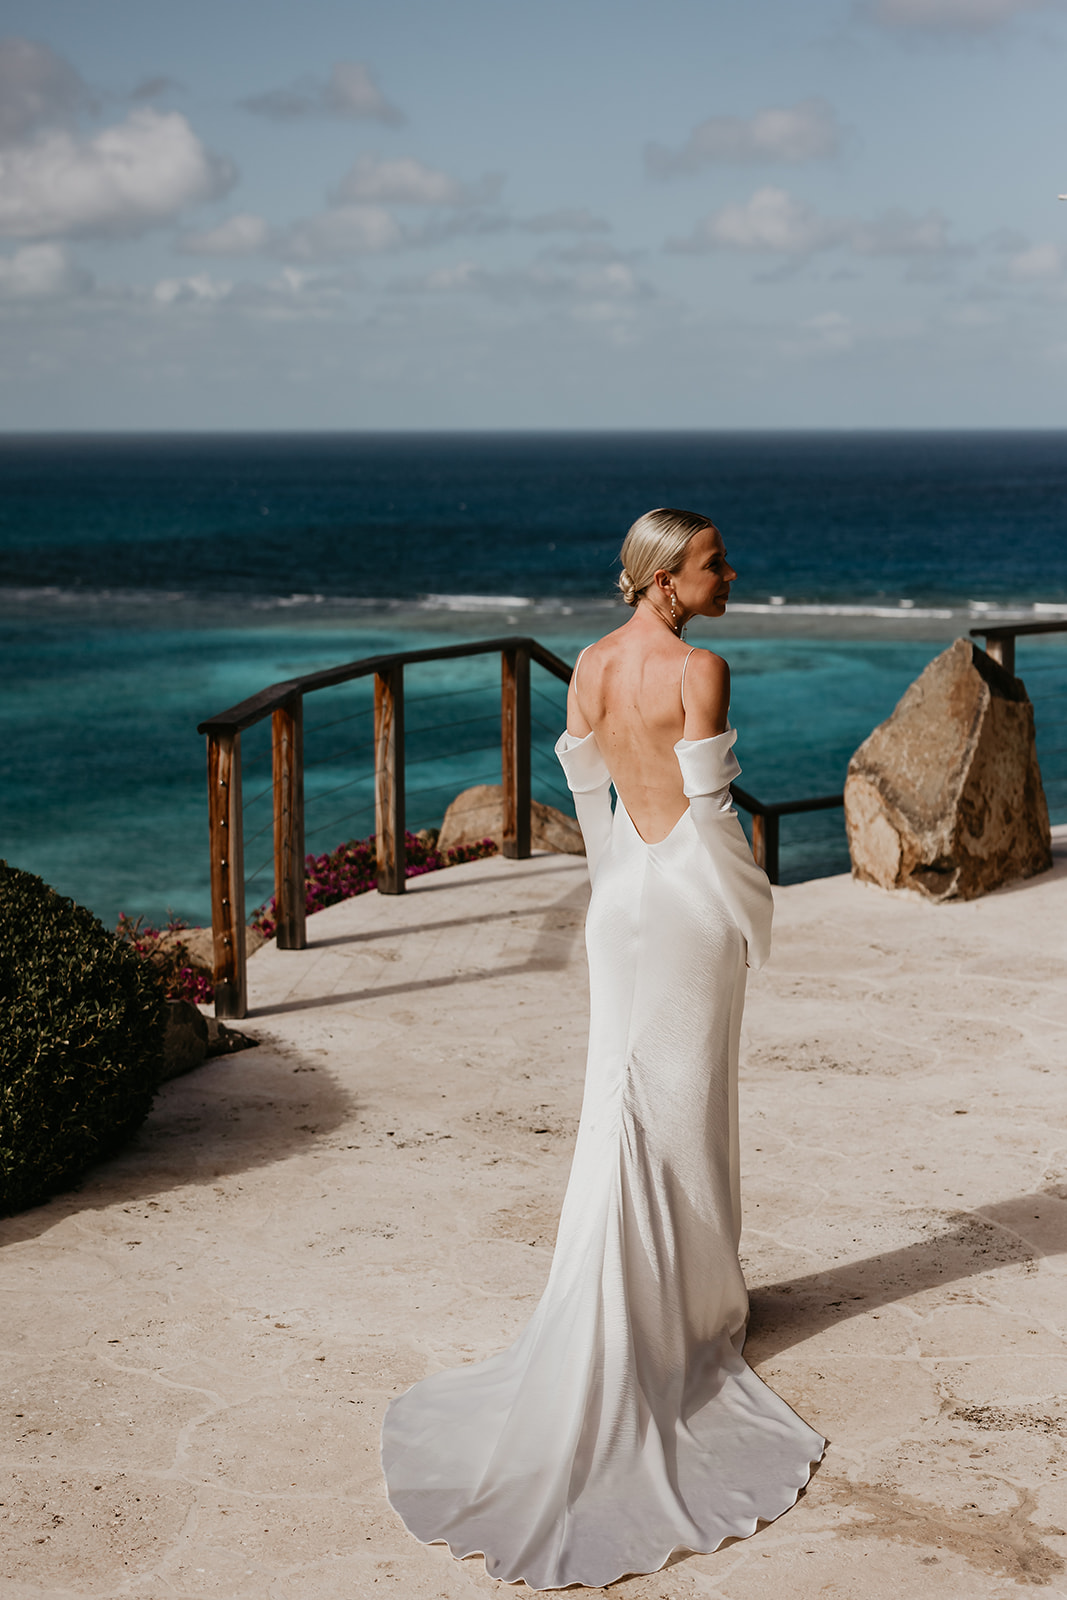 Indulge in the epitome of elegance with a British Virgin Islands destination wedding, featuring lavish beachfront villas